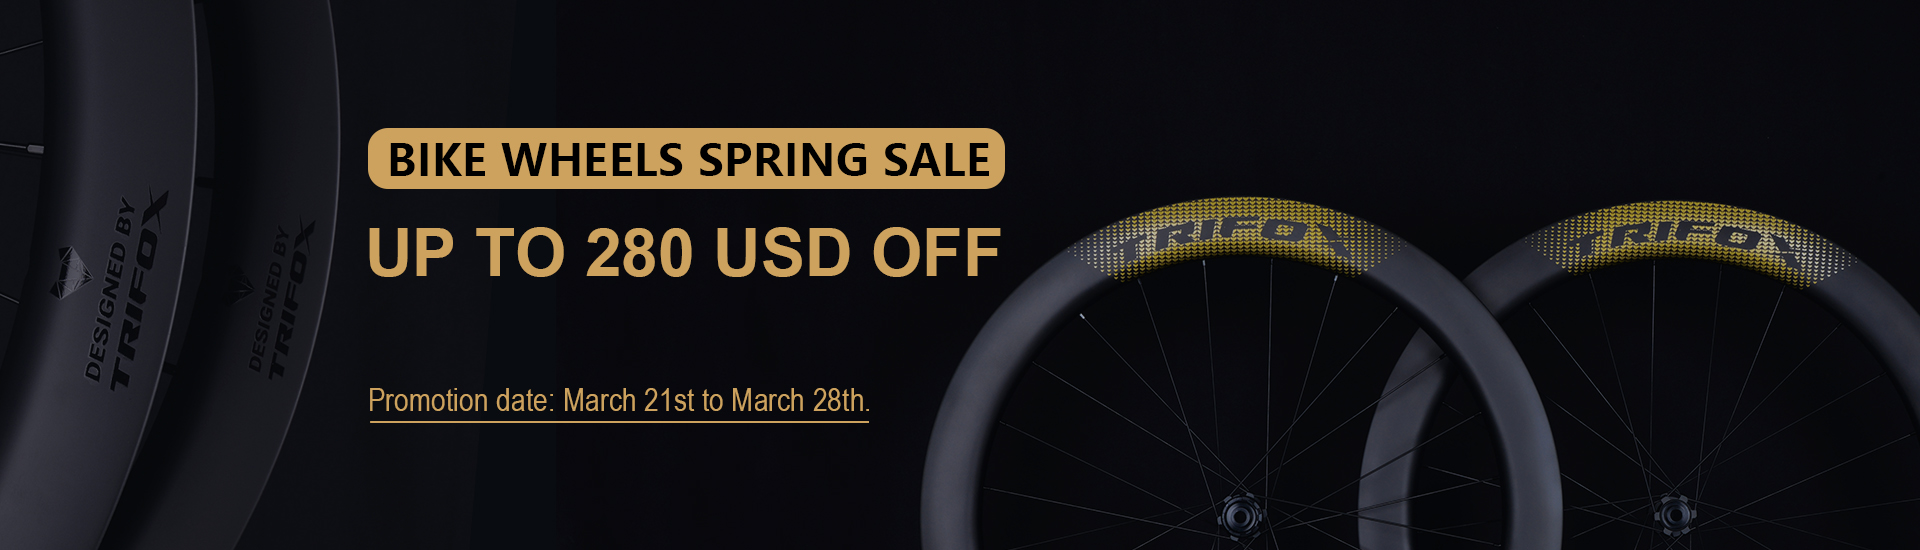 Bike Wheels Spring Sale Home Banner